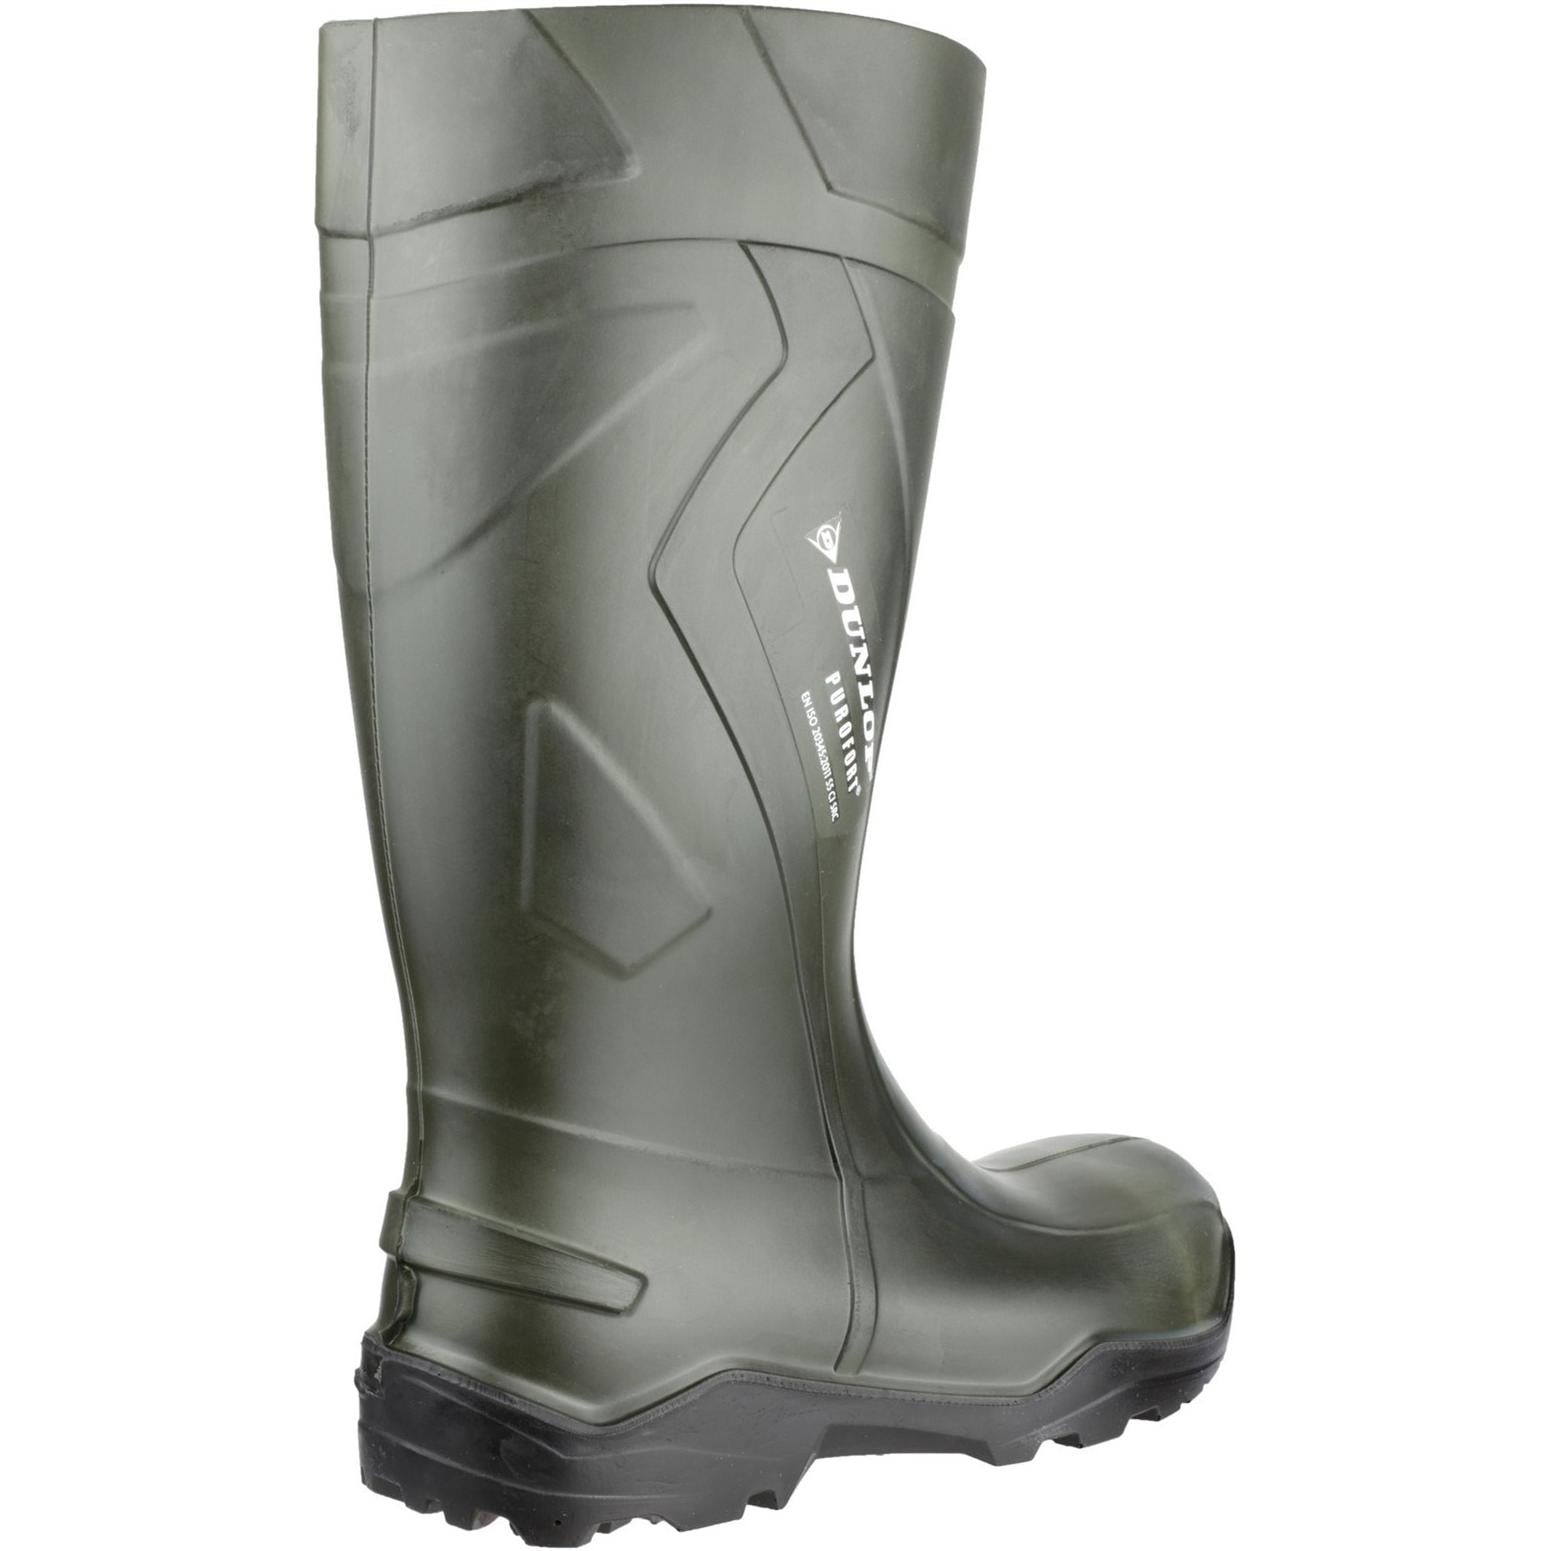 Dunlop Purofort+ Full Safety Wellington Boots